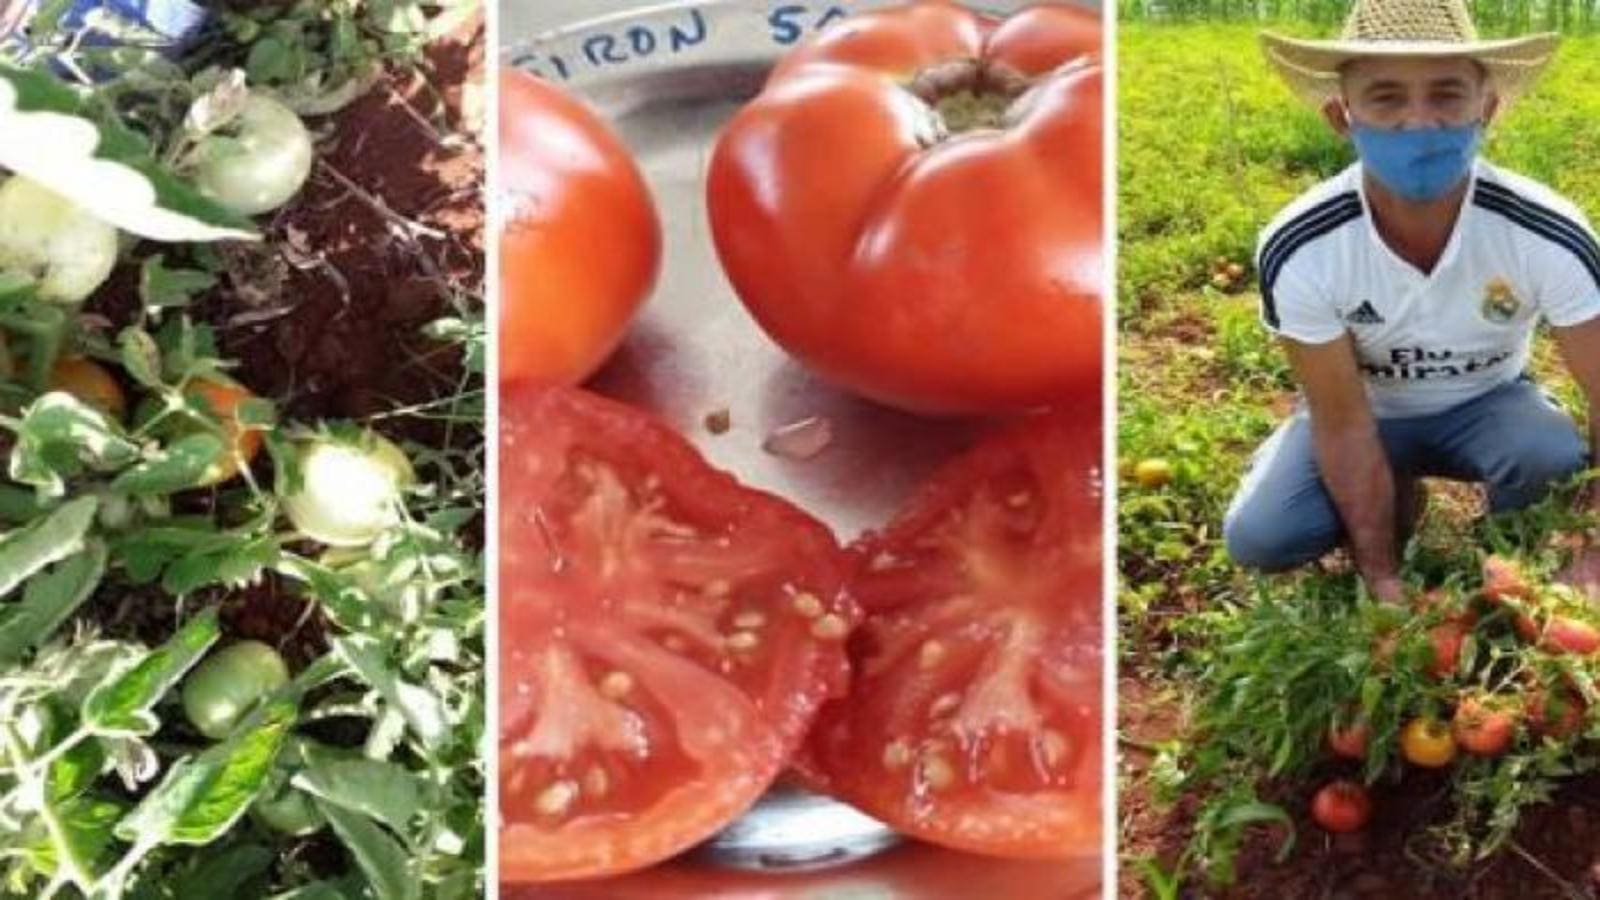 Cuban farmers to receive bioengineered tomatoes, soybeans seeds